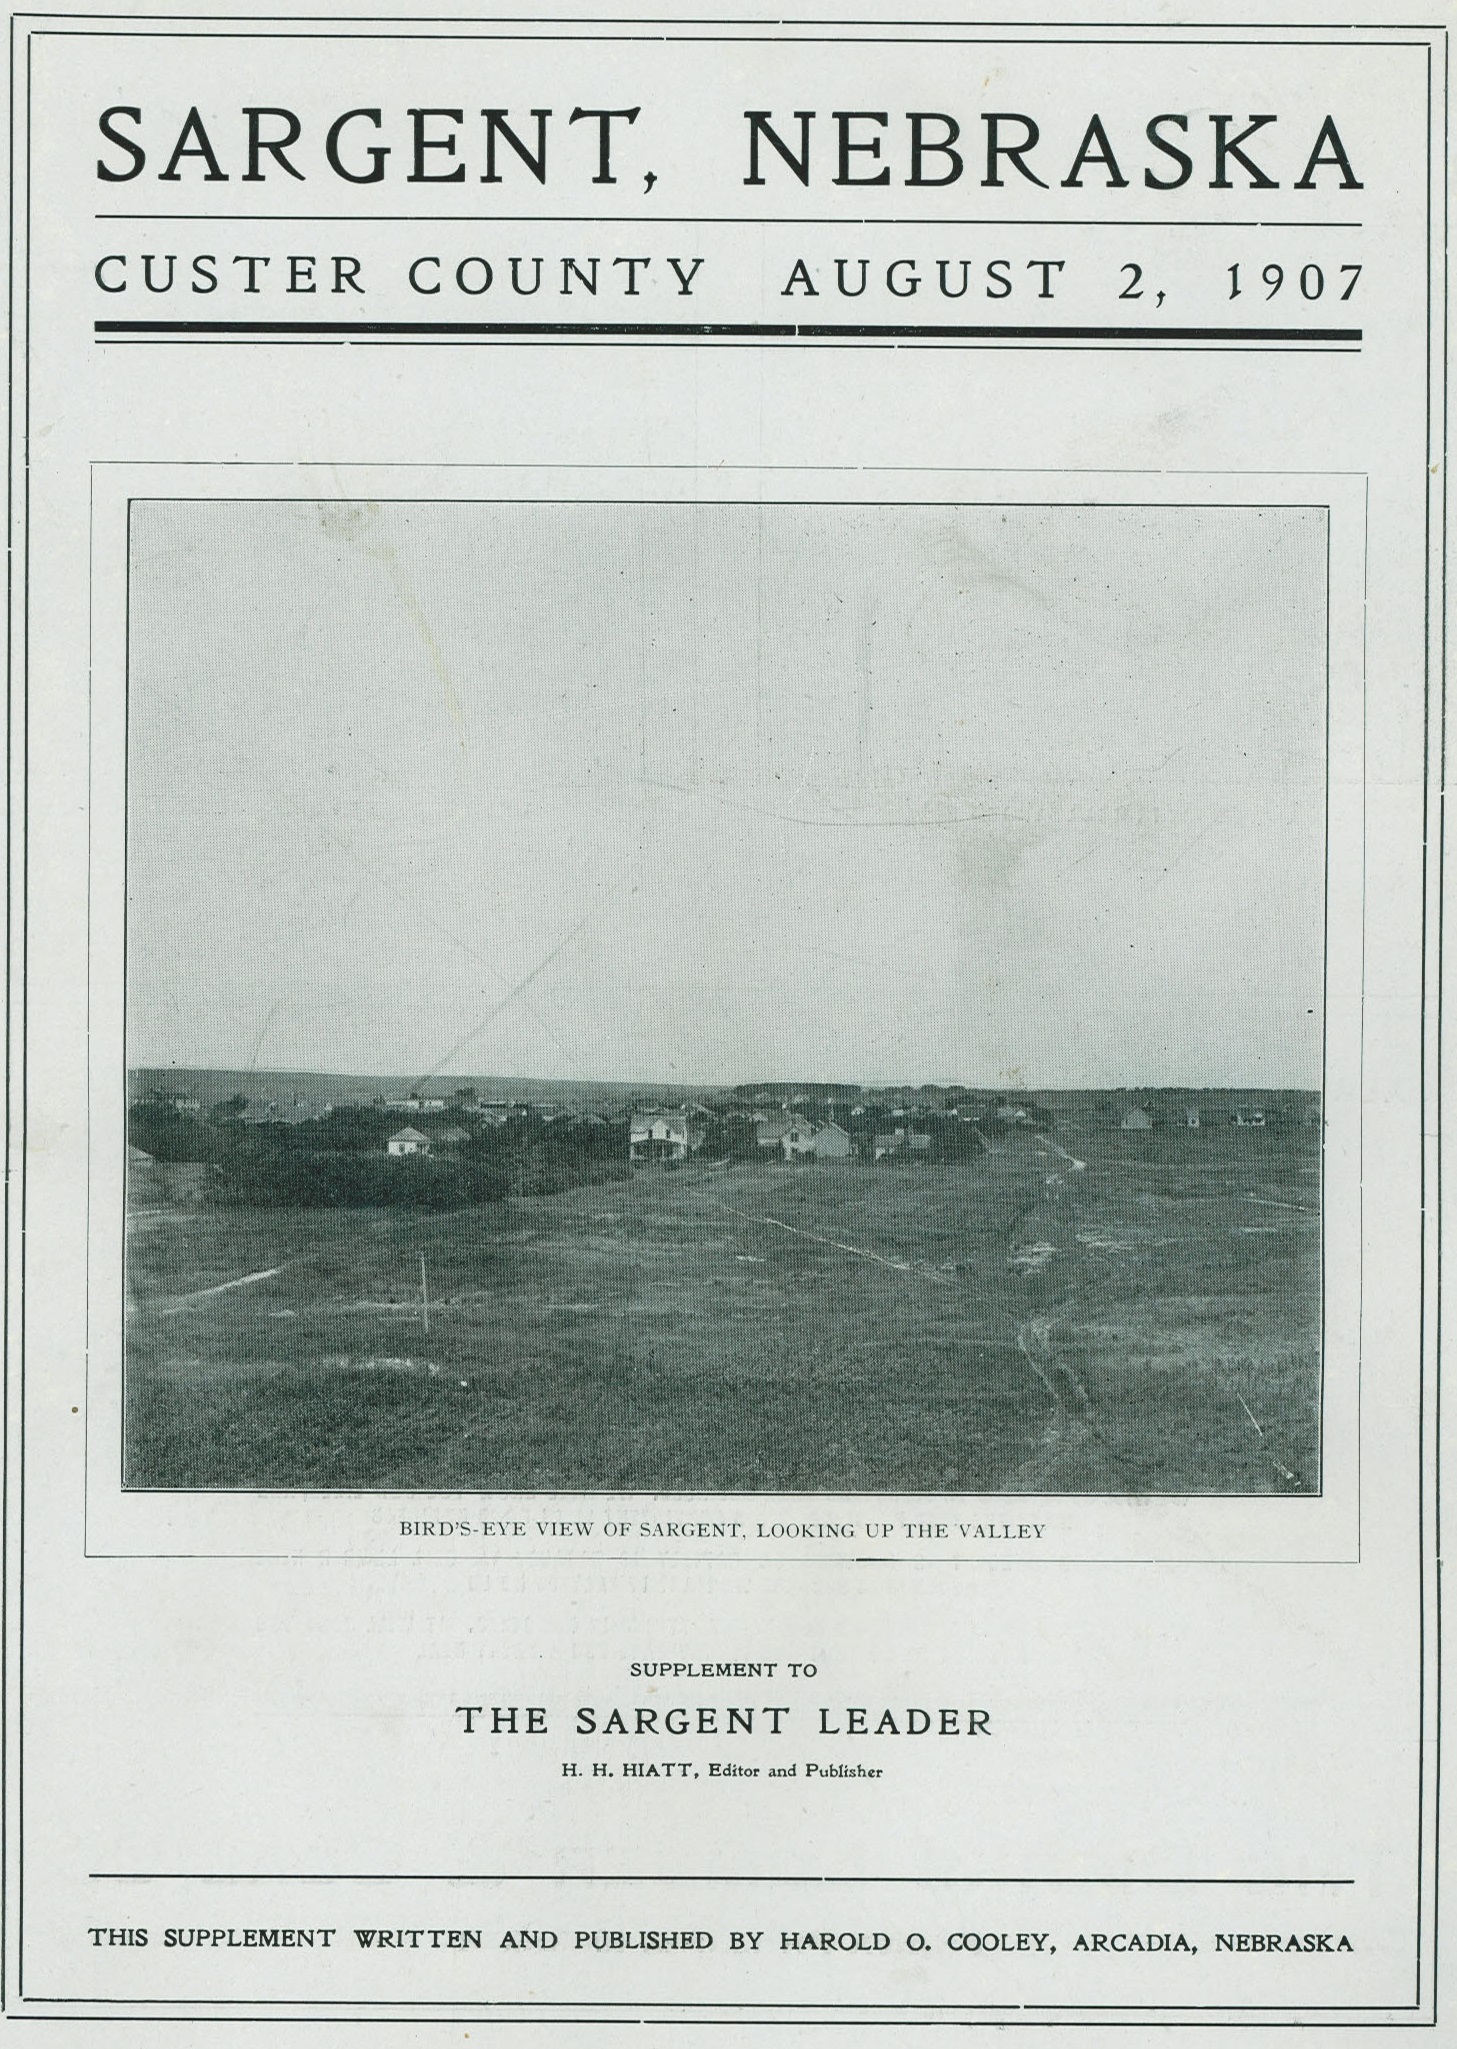 Sargent, Nebraska, Custer County, August 2, 1907